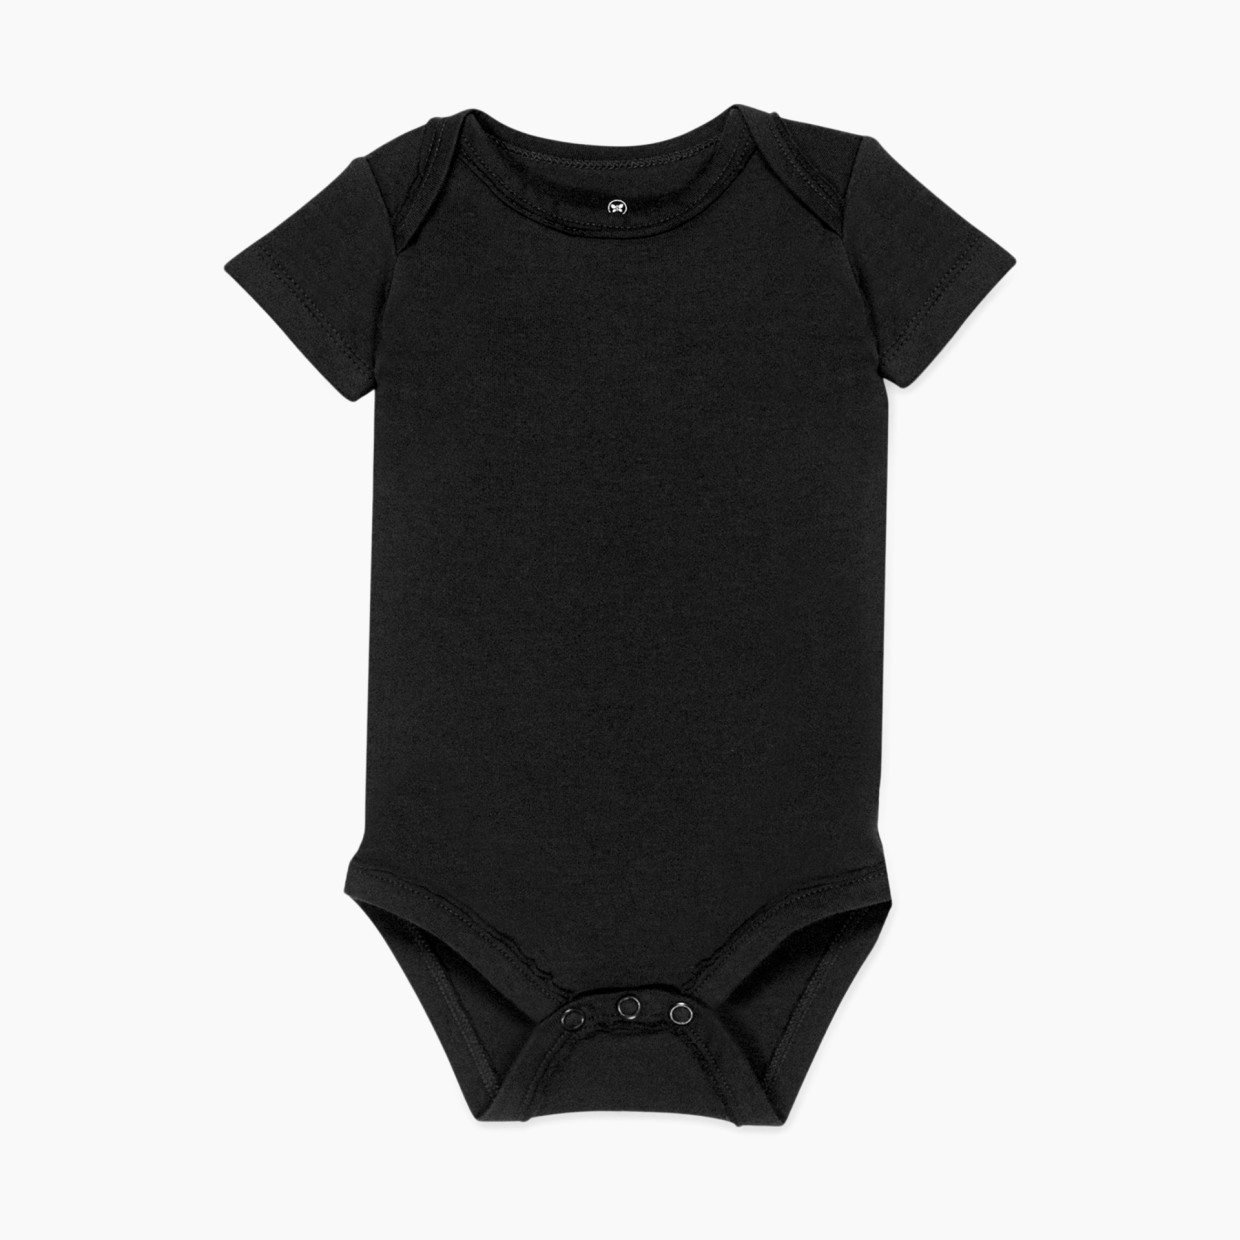 Honest Baby Clothing 5-Pack Organic Cotton Short Sleeve Bodysuit - Gray Ombre, Nb, 5.